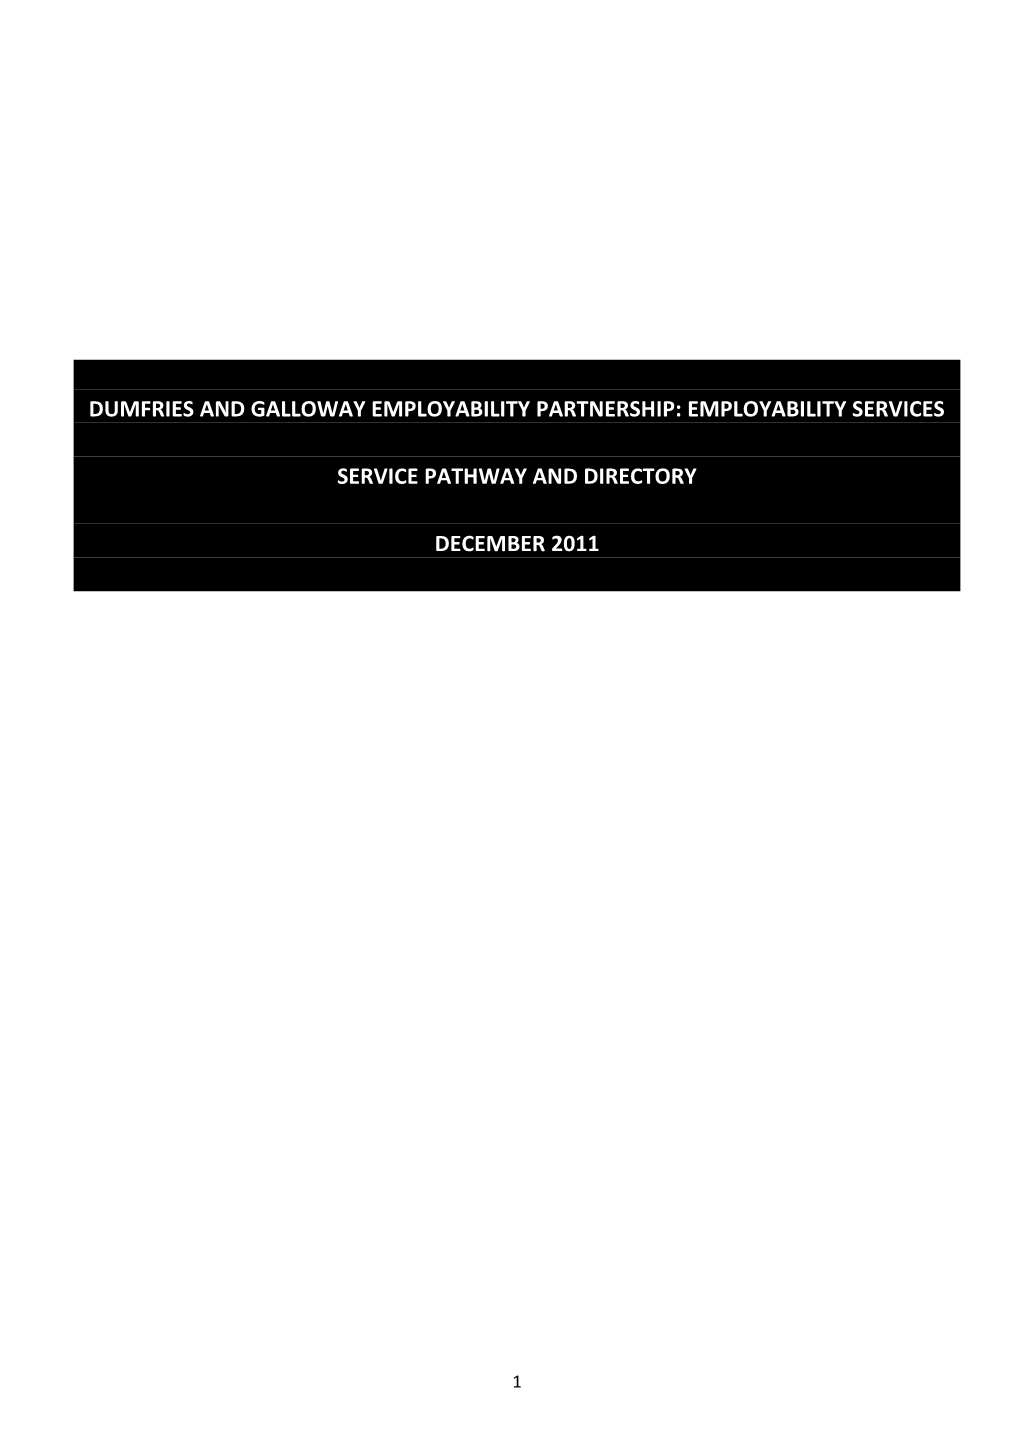 Dumfries and Galloway Employability Partnership: Employability Services